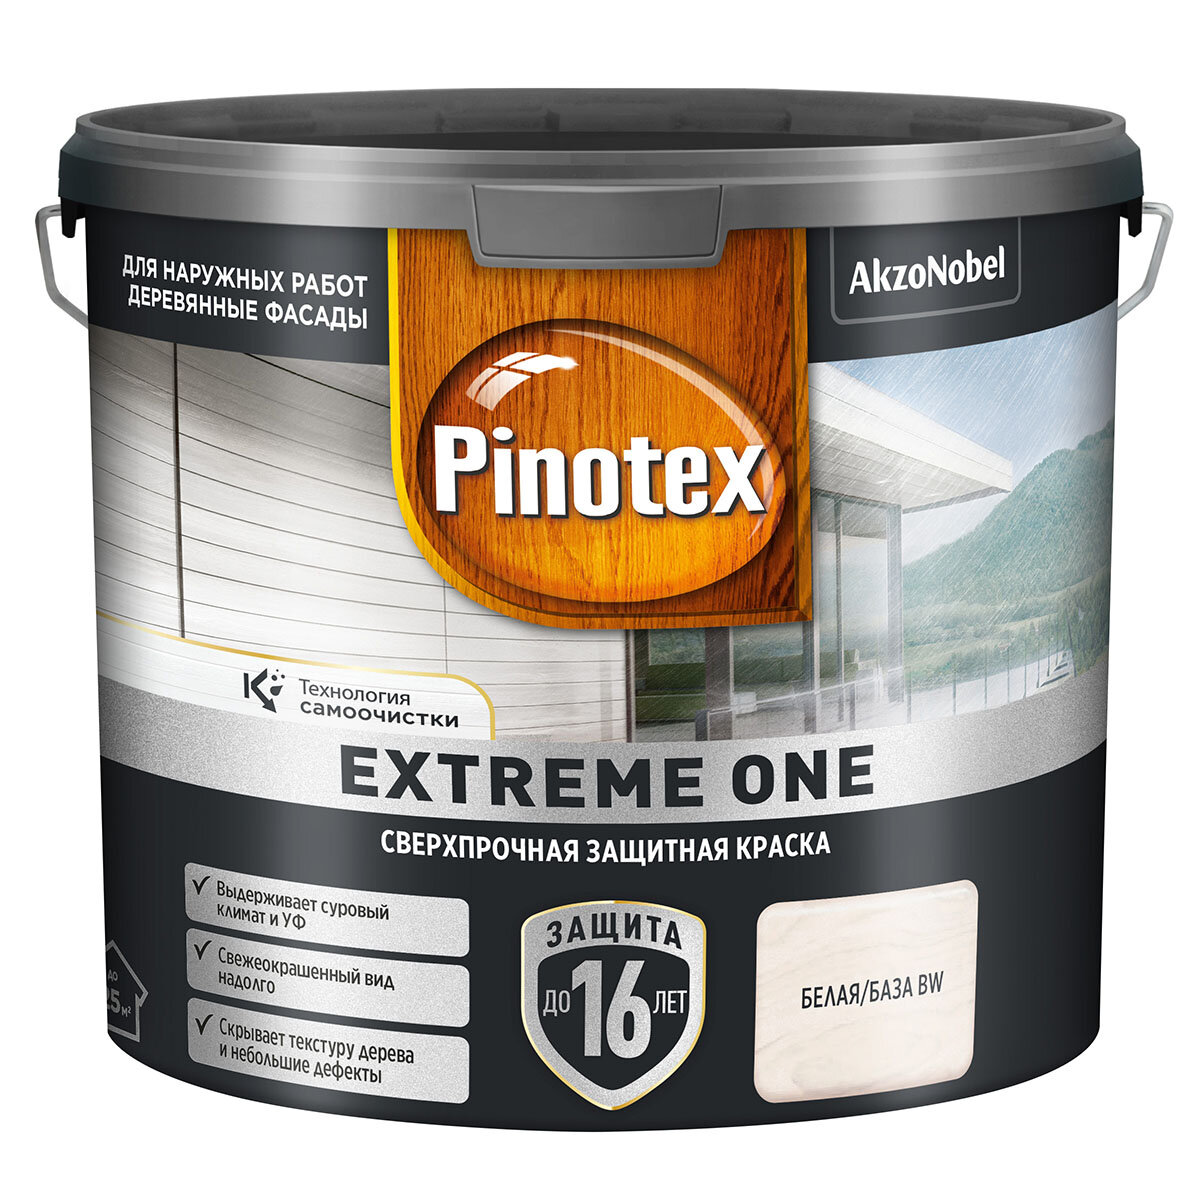 PINOTEX EXTREME ONE / пинотекс экстрим краска сверхпрочная с эффектом самоочистки база BW new 2,5 л